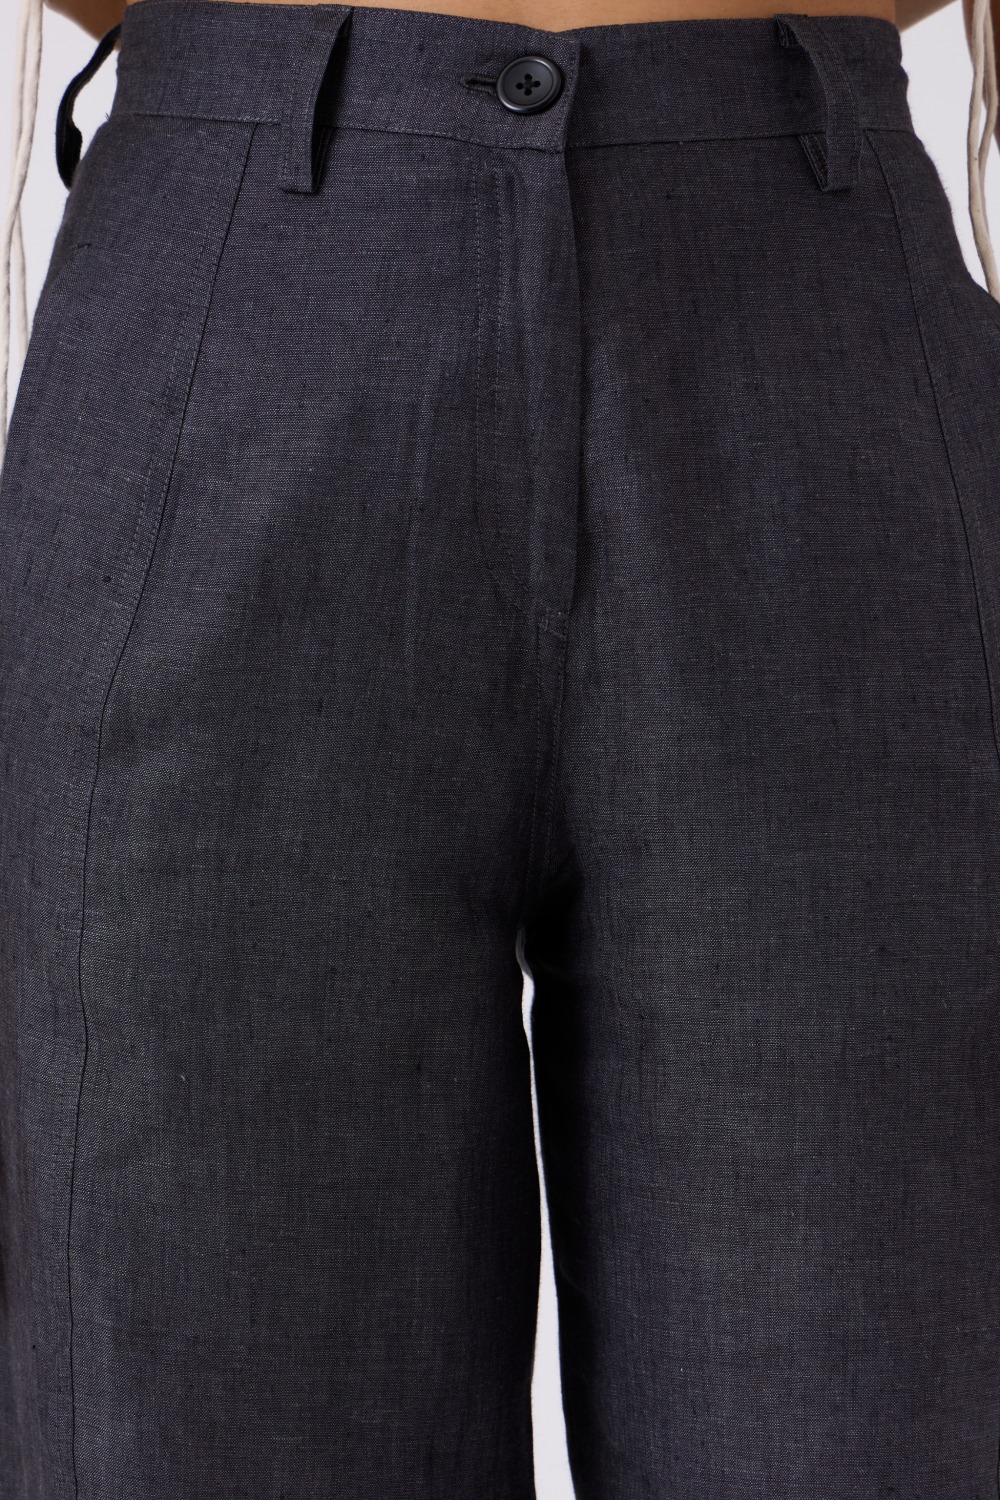 Nex Cropped Charcoal Linen Pants